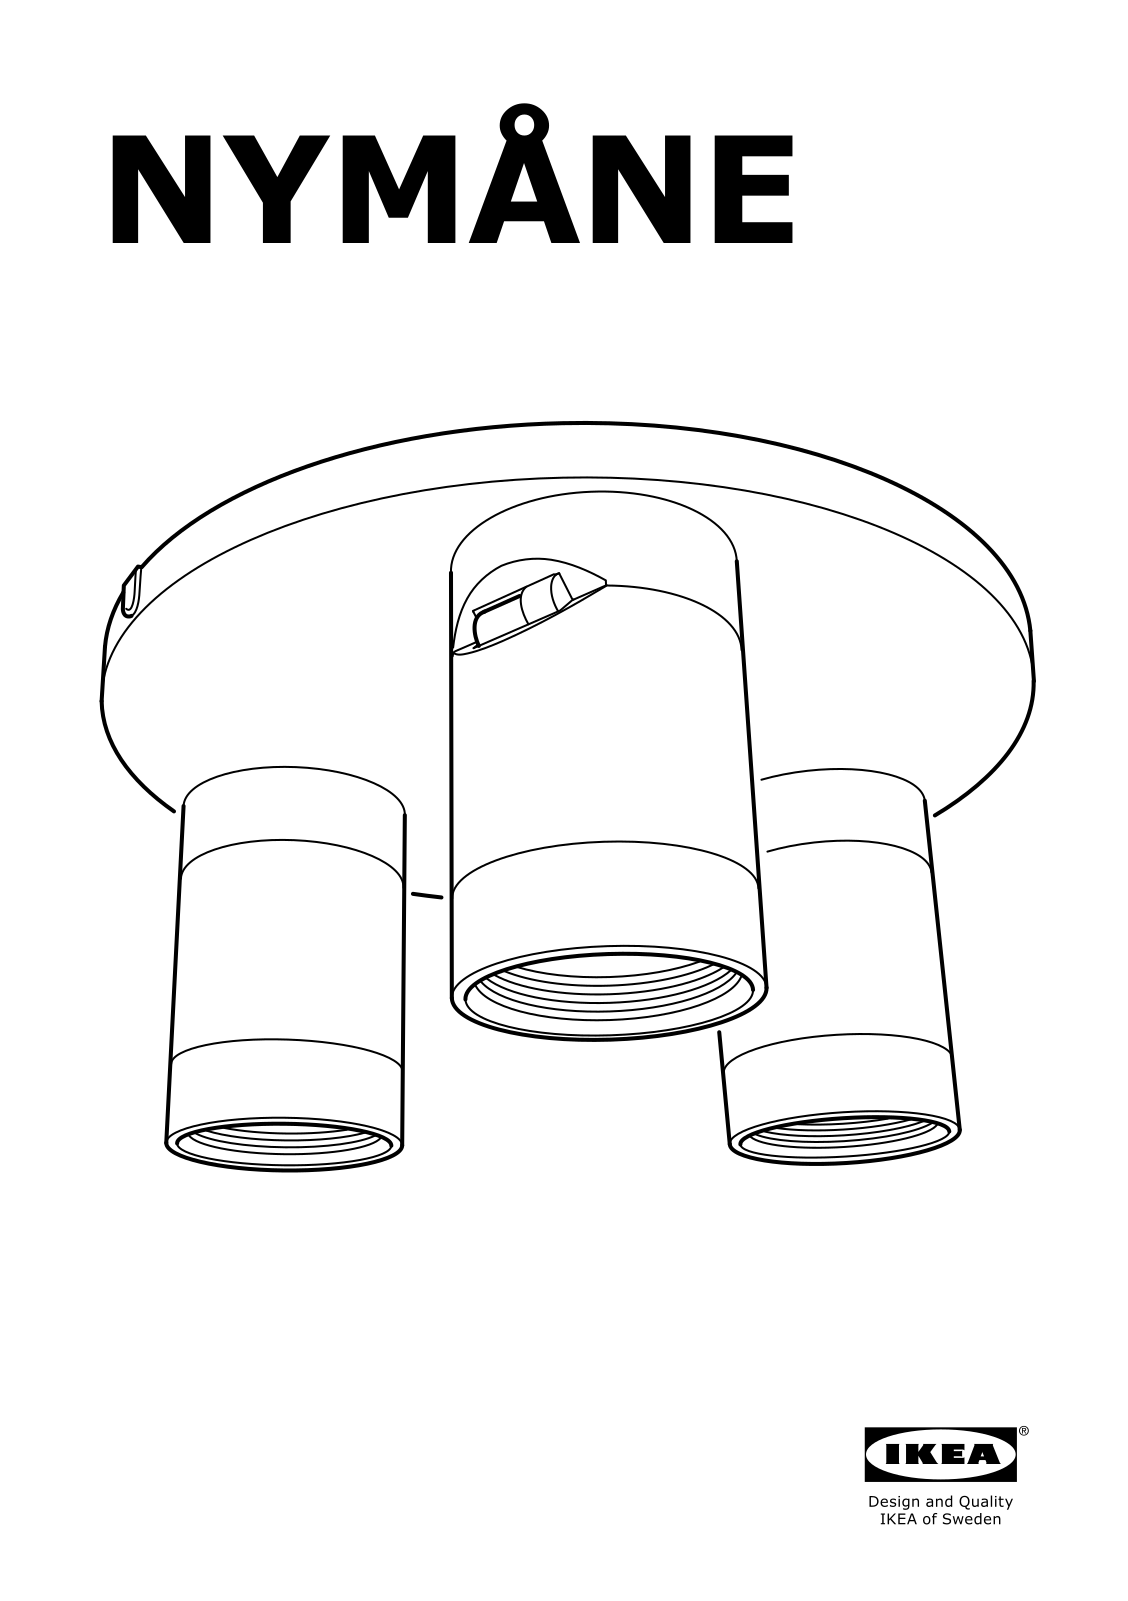 IKEA NYMANE User Manual